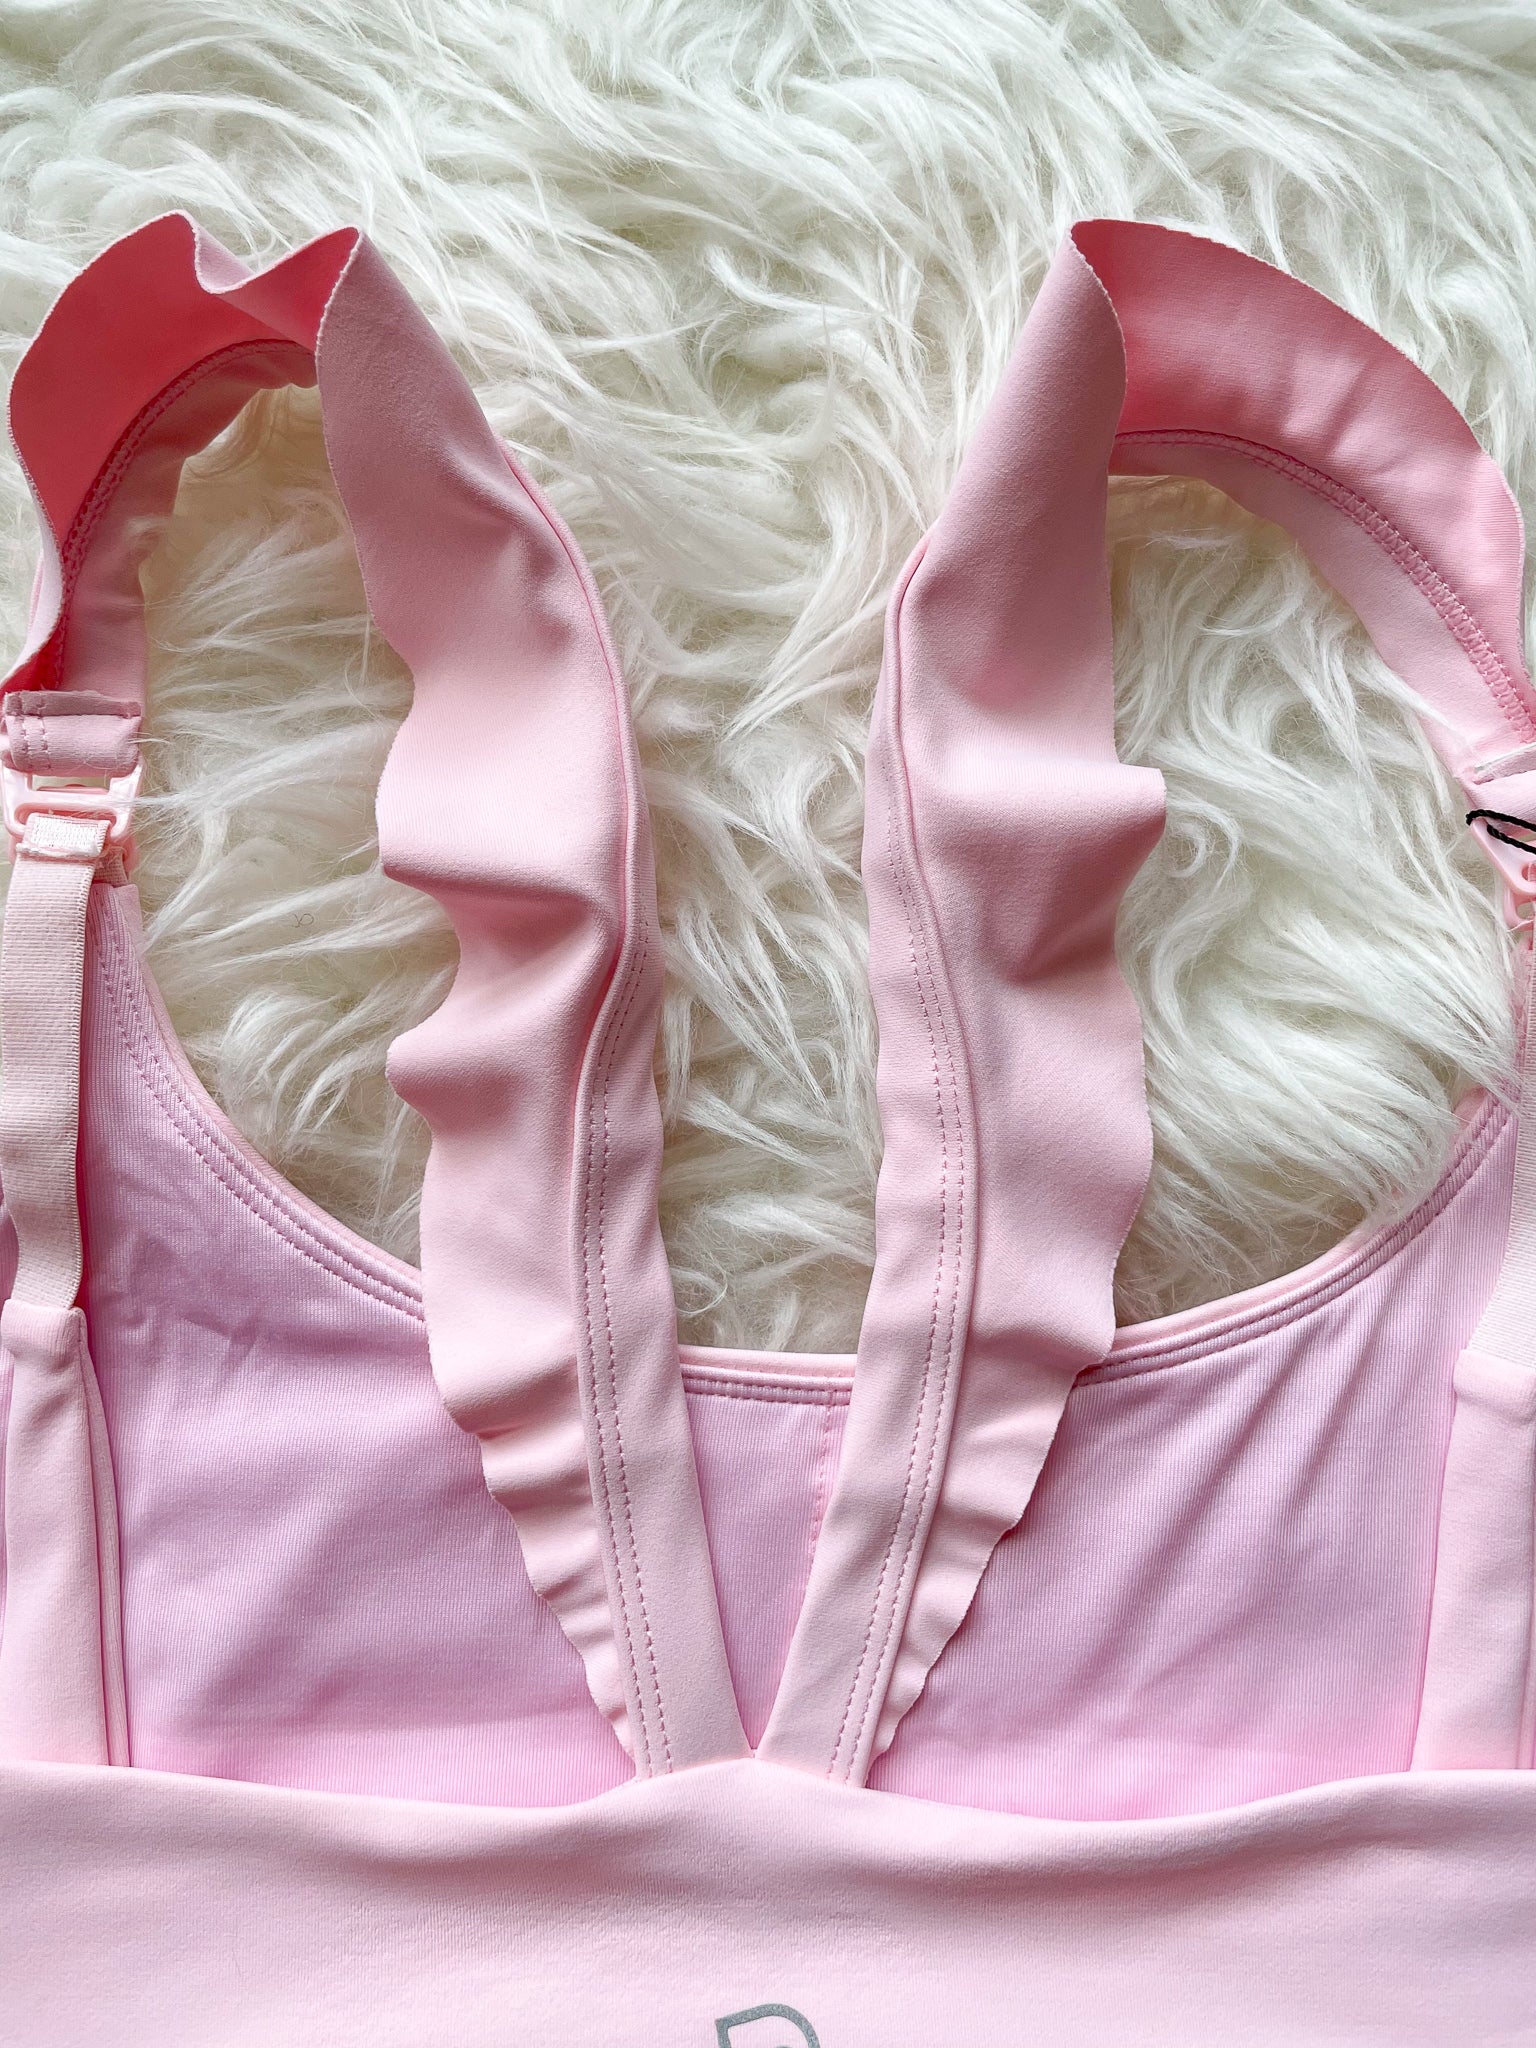 Bright pink bra frim VS Pink size 34A